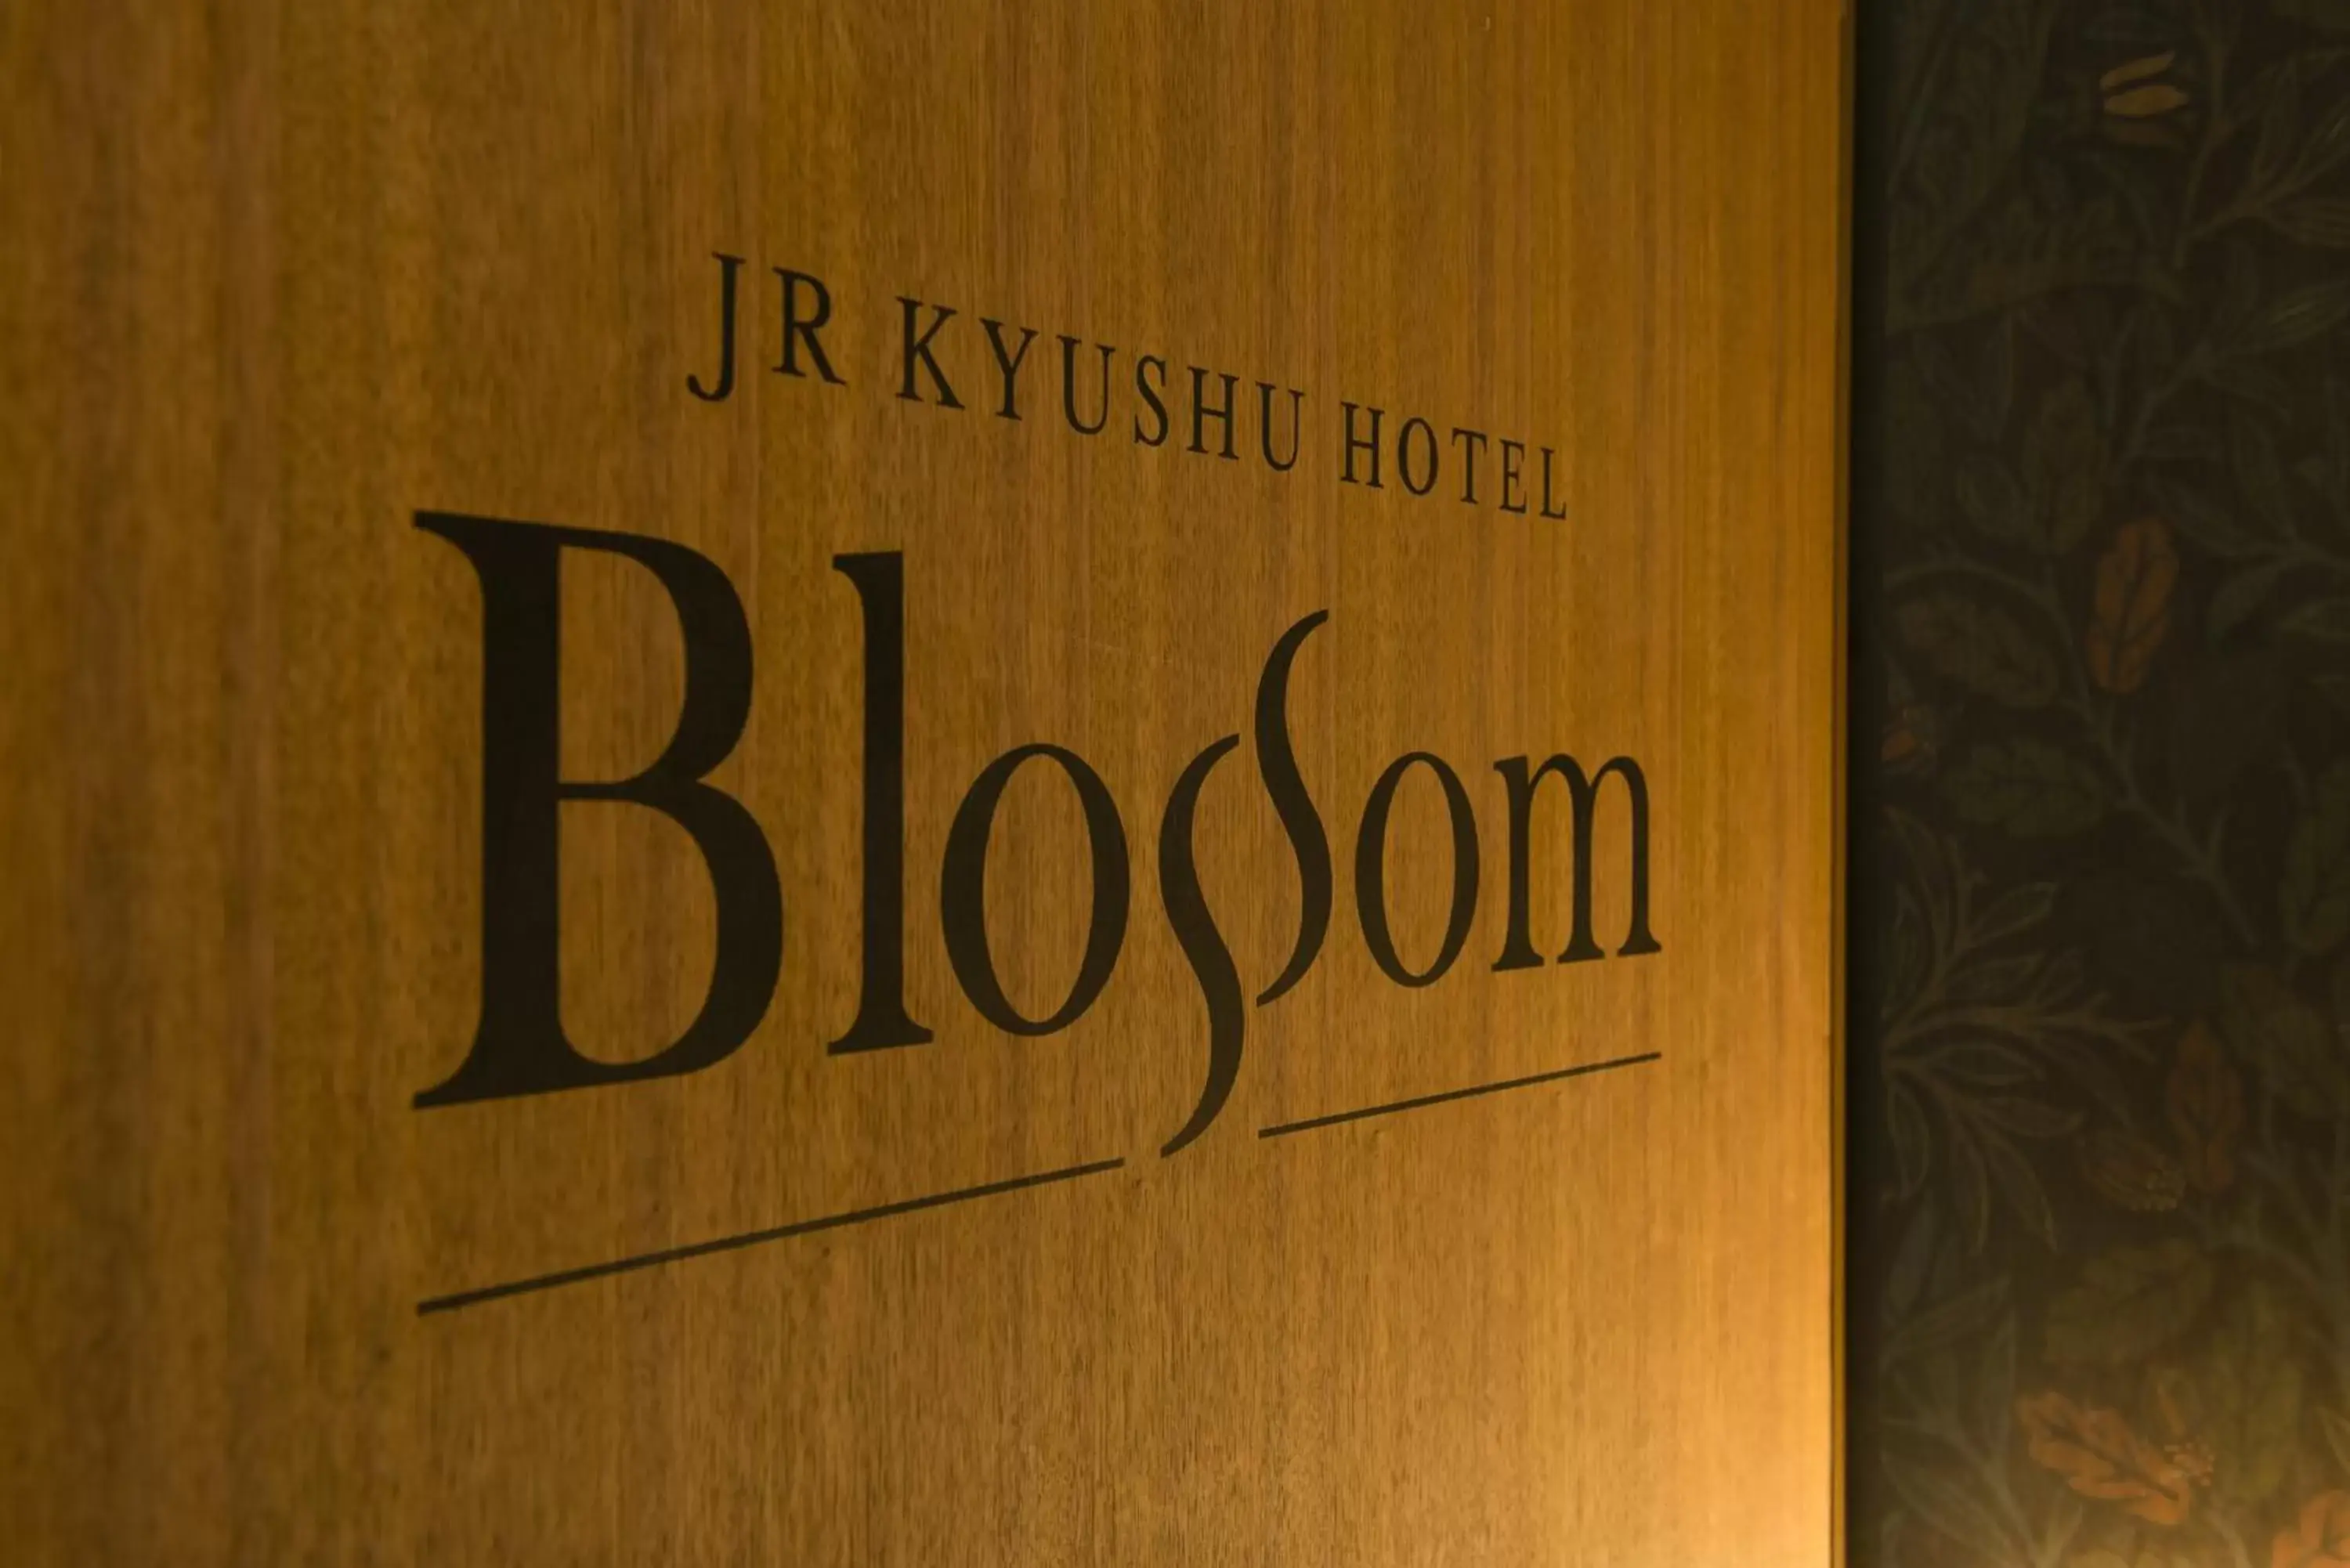 Property logo or sign in JR Kyushu Hotel Blossom Oita